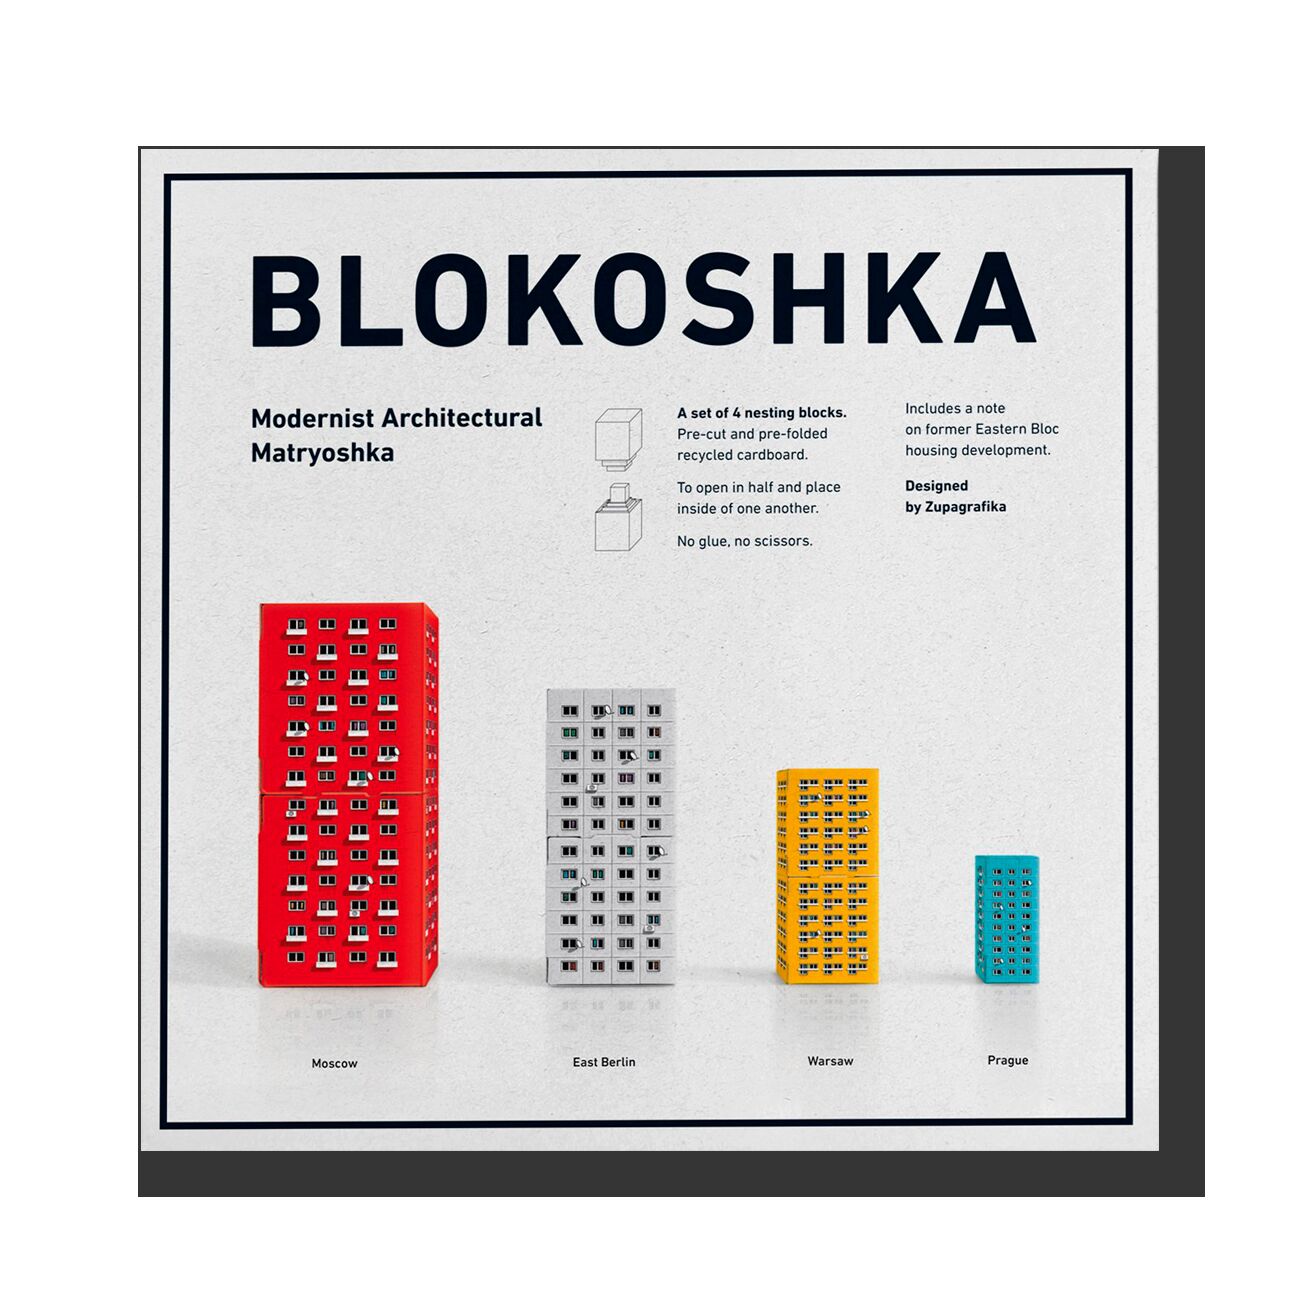 Blokoshka: Modernist Architectural Matryoshka